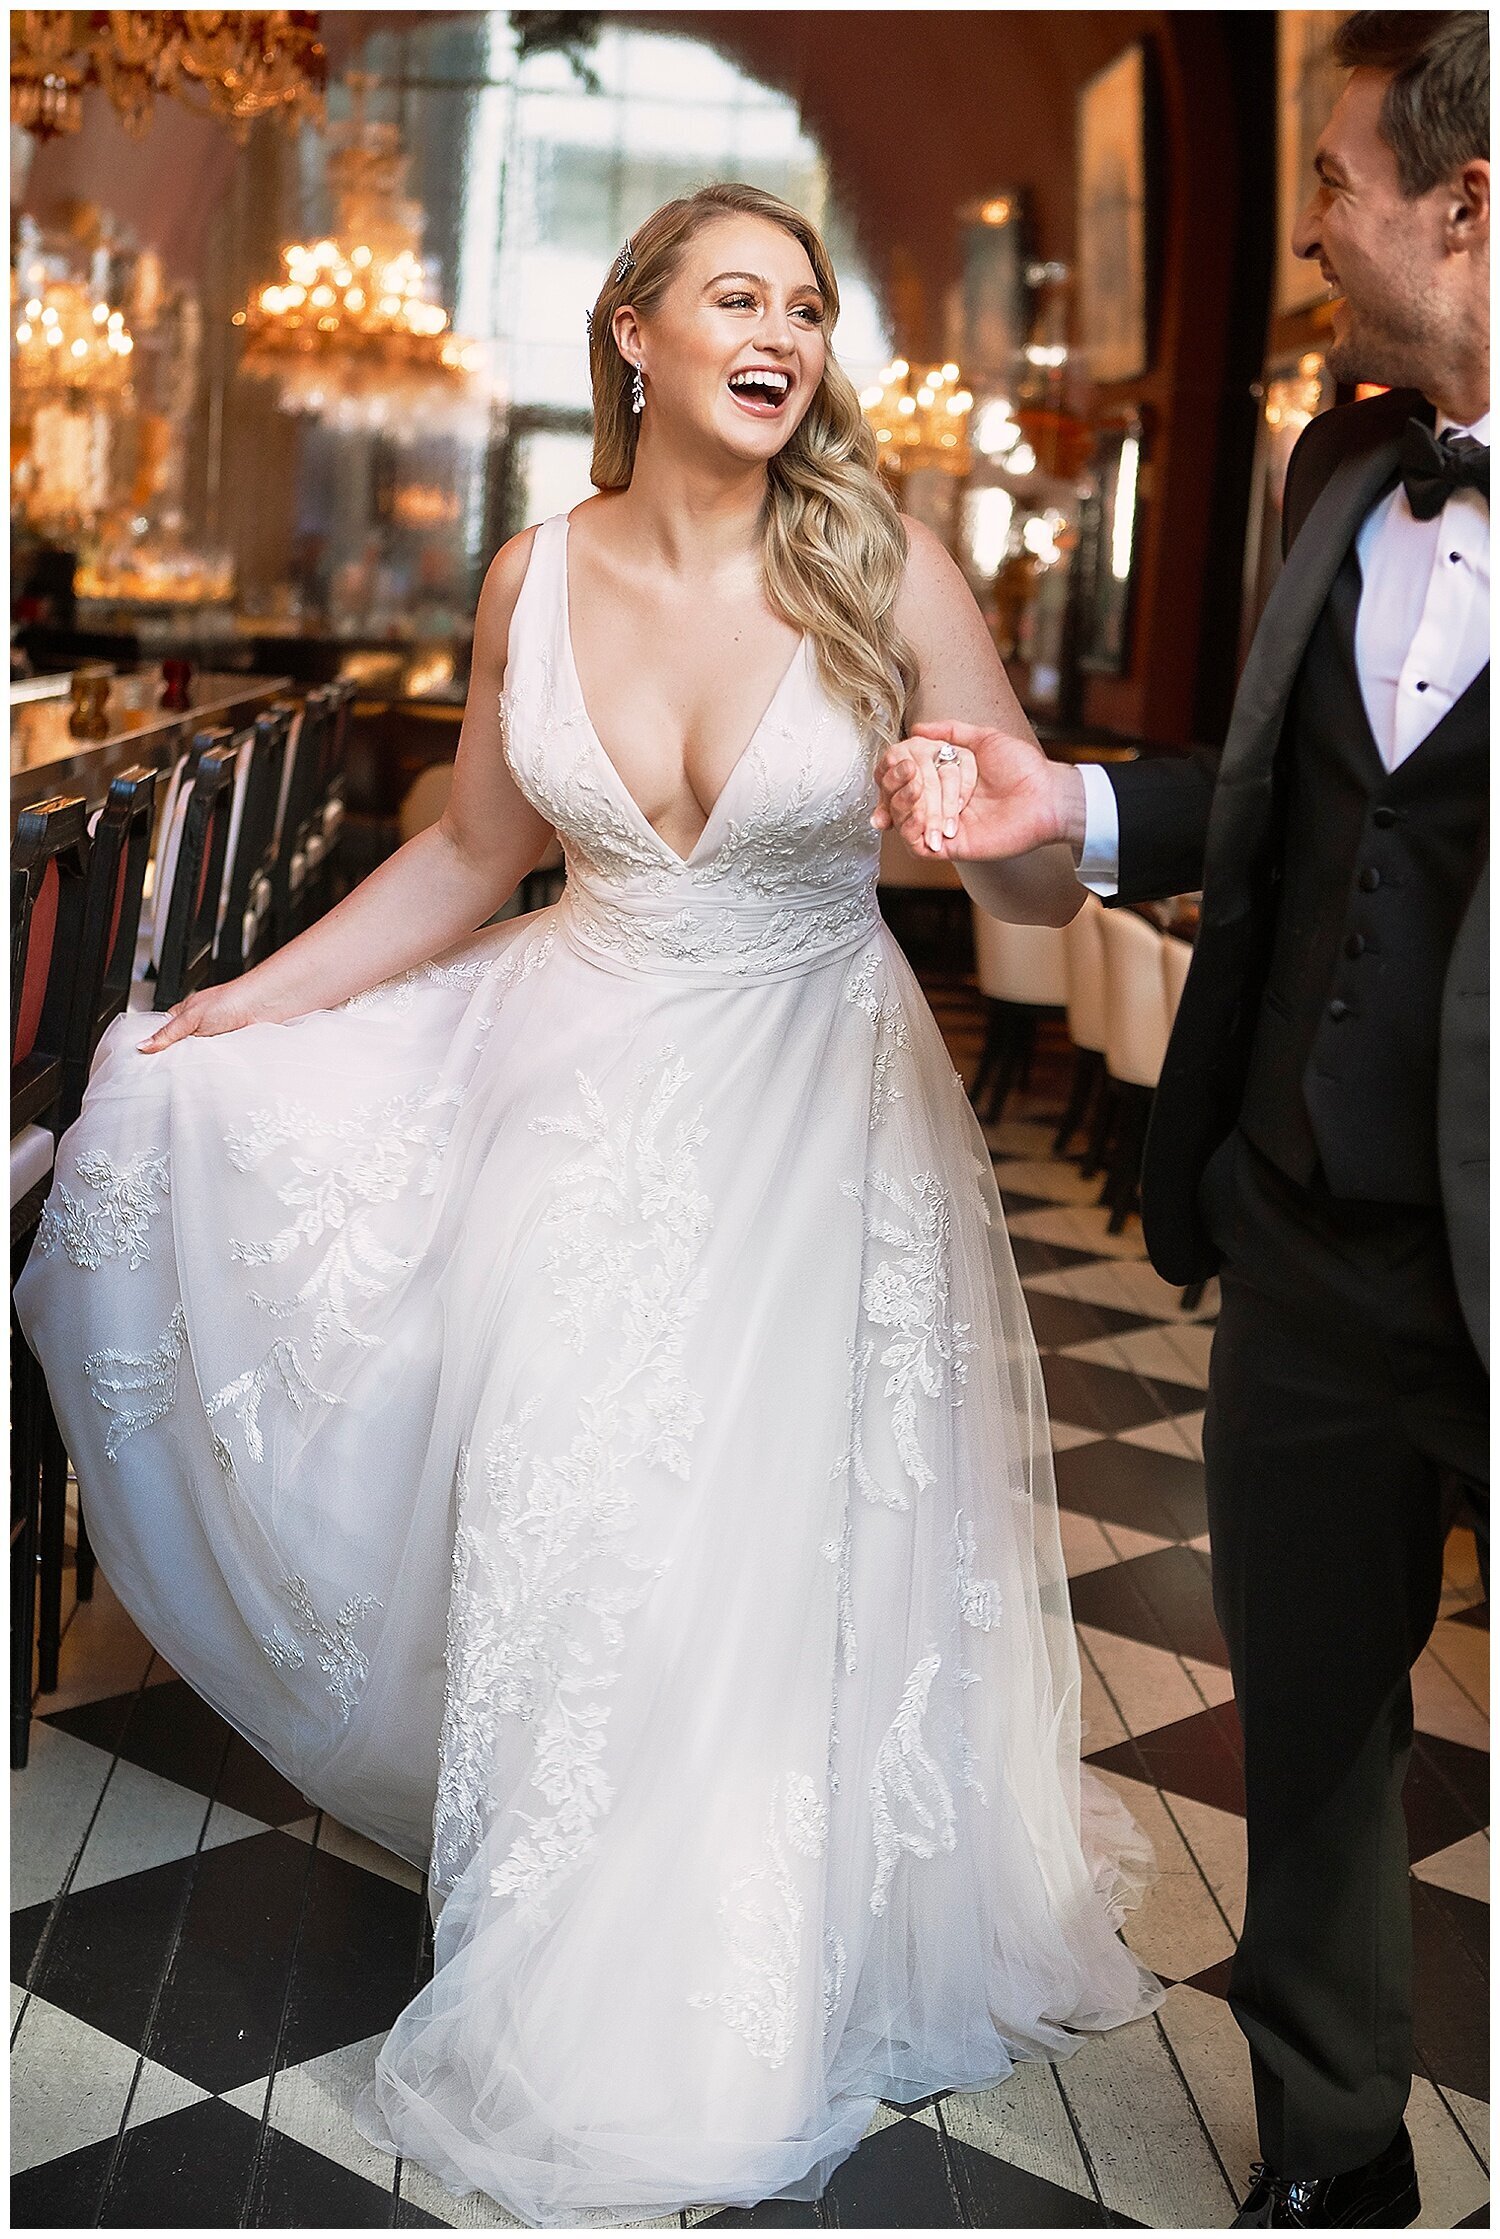 The Curvy Bride: Plus Size Gowns 101